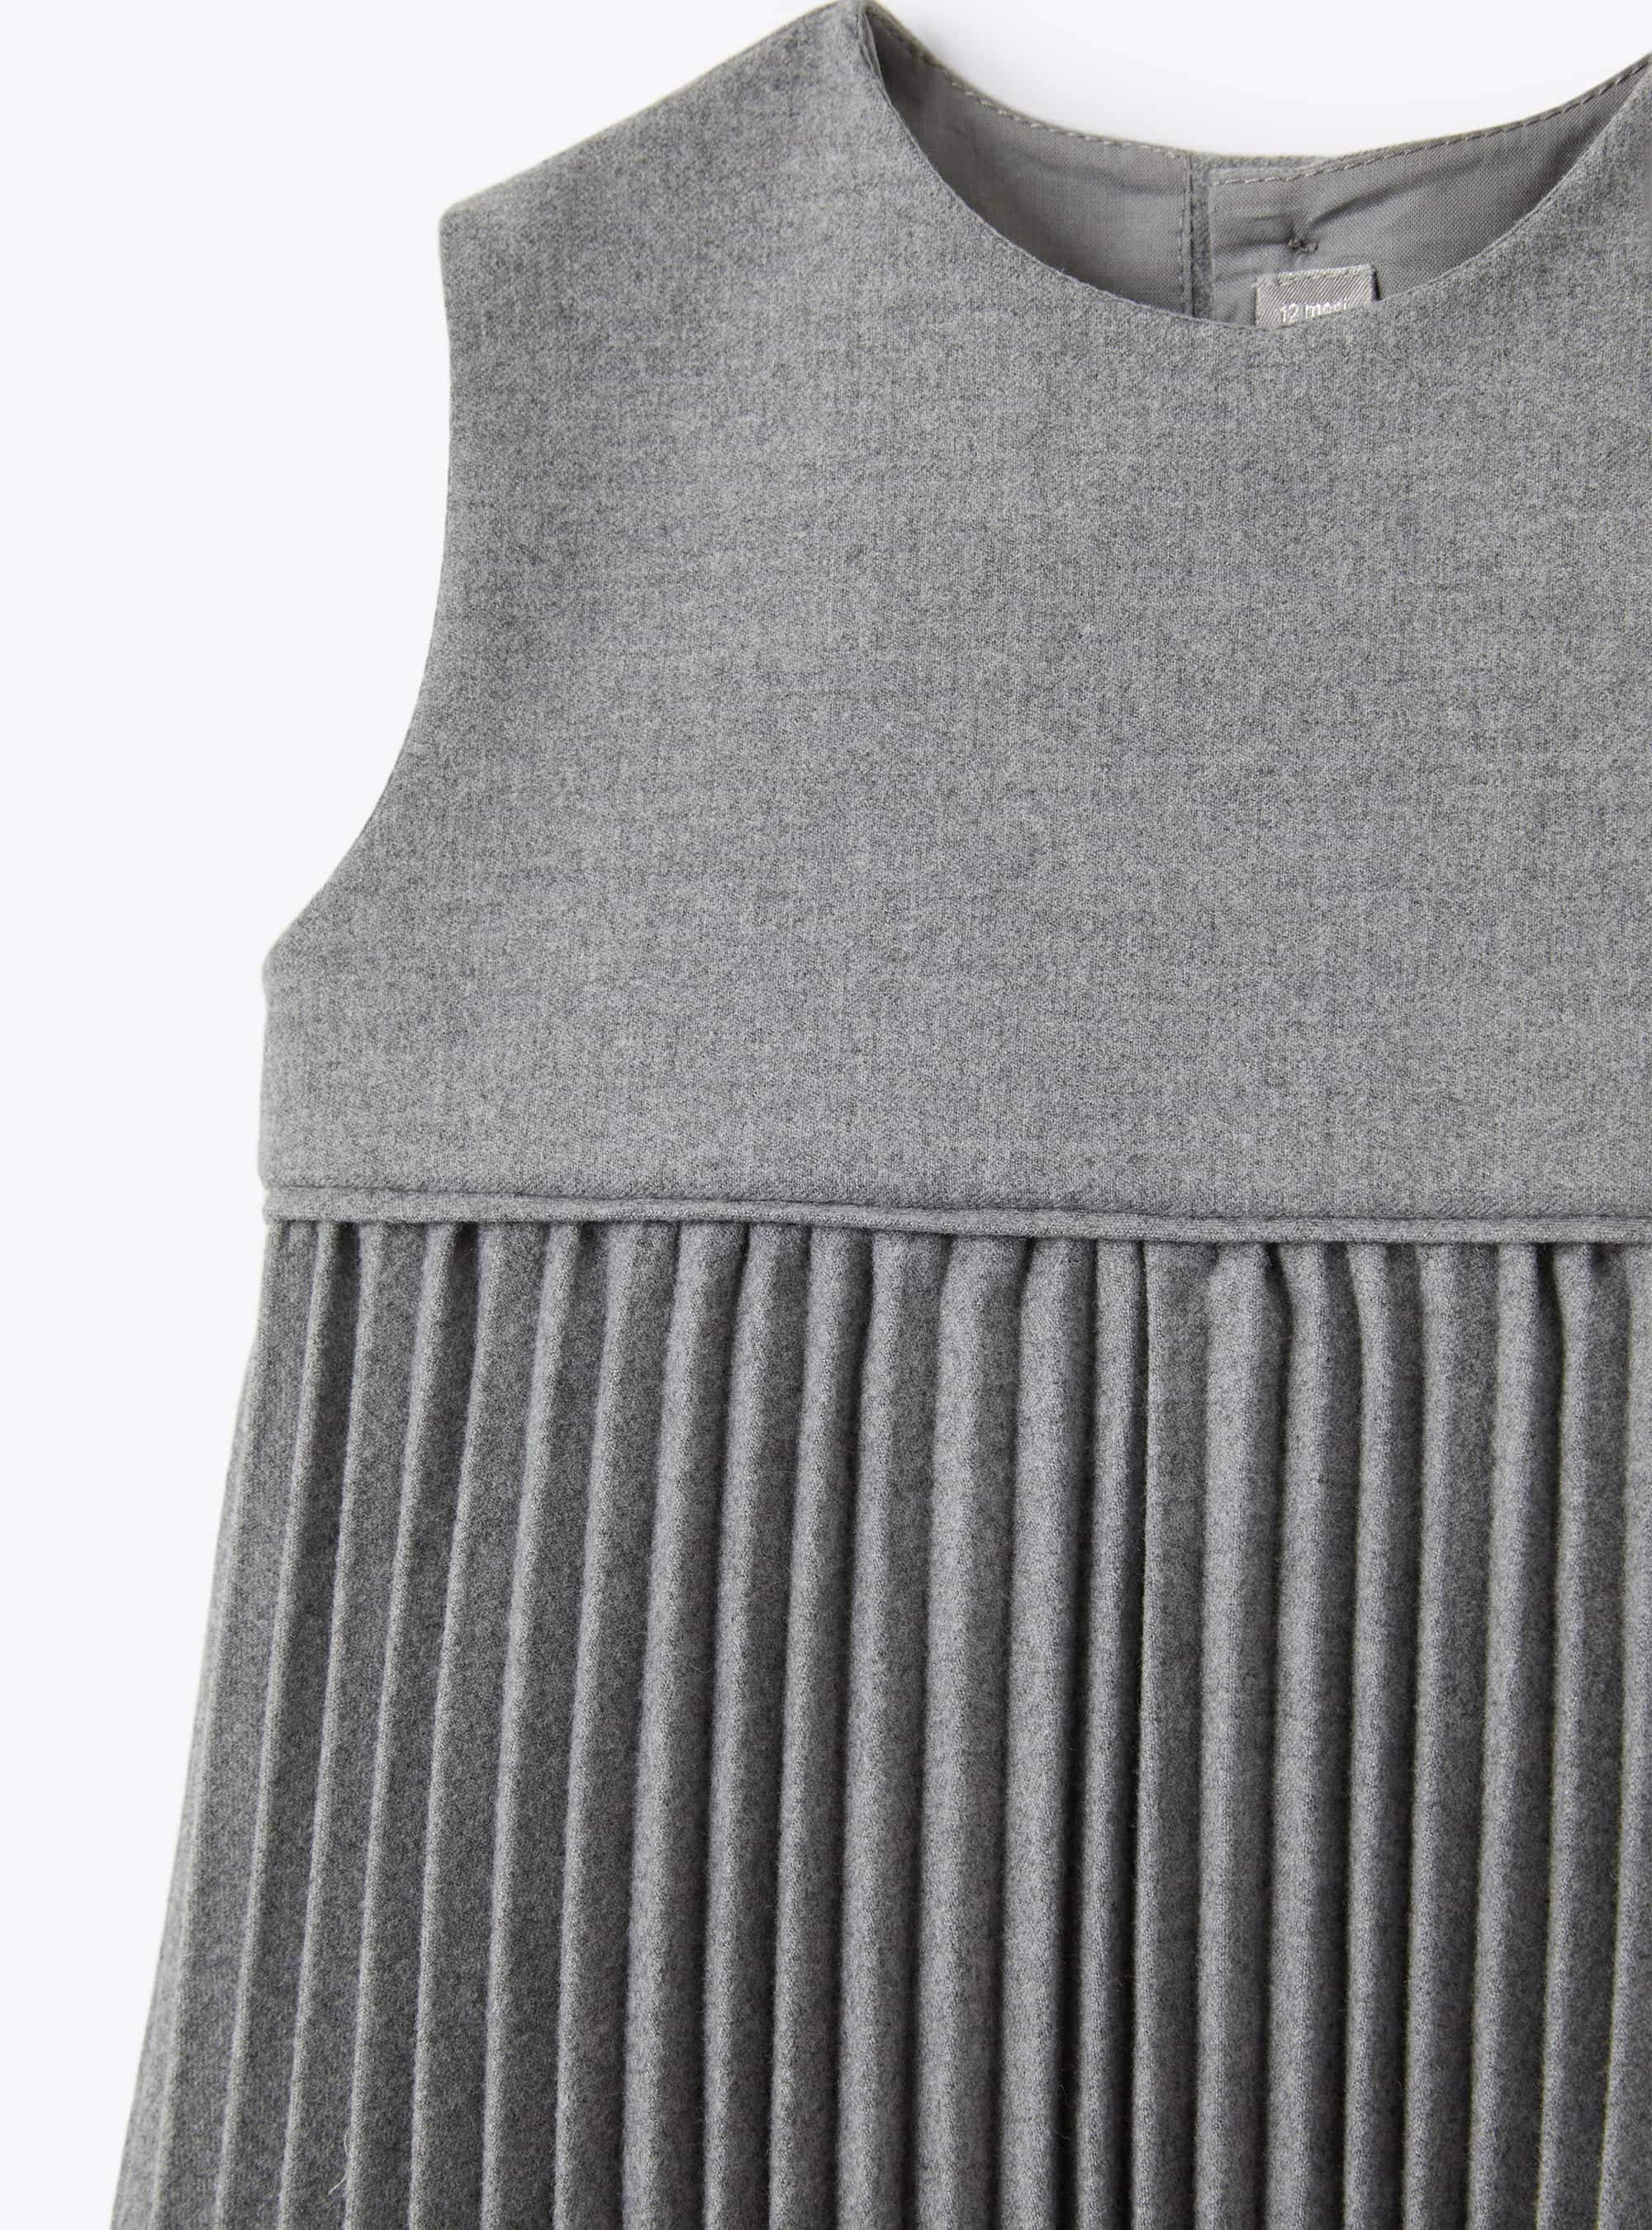 Pleated sleeveless dress - Grey | Il Gufo